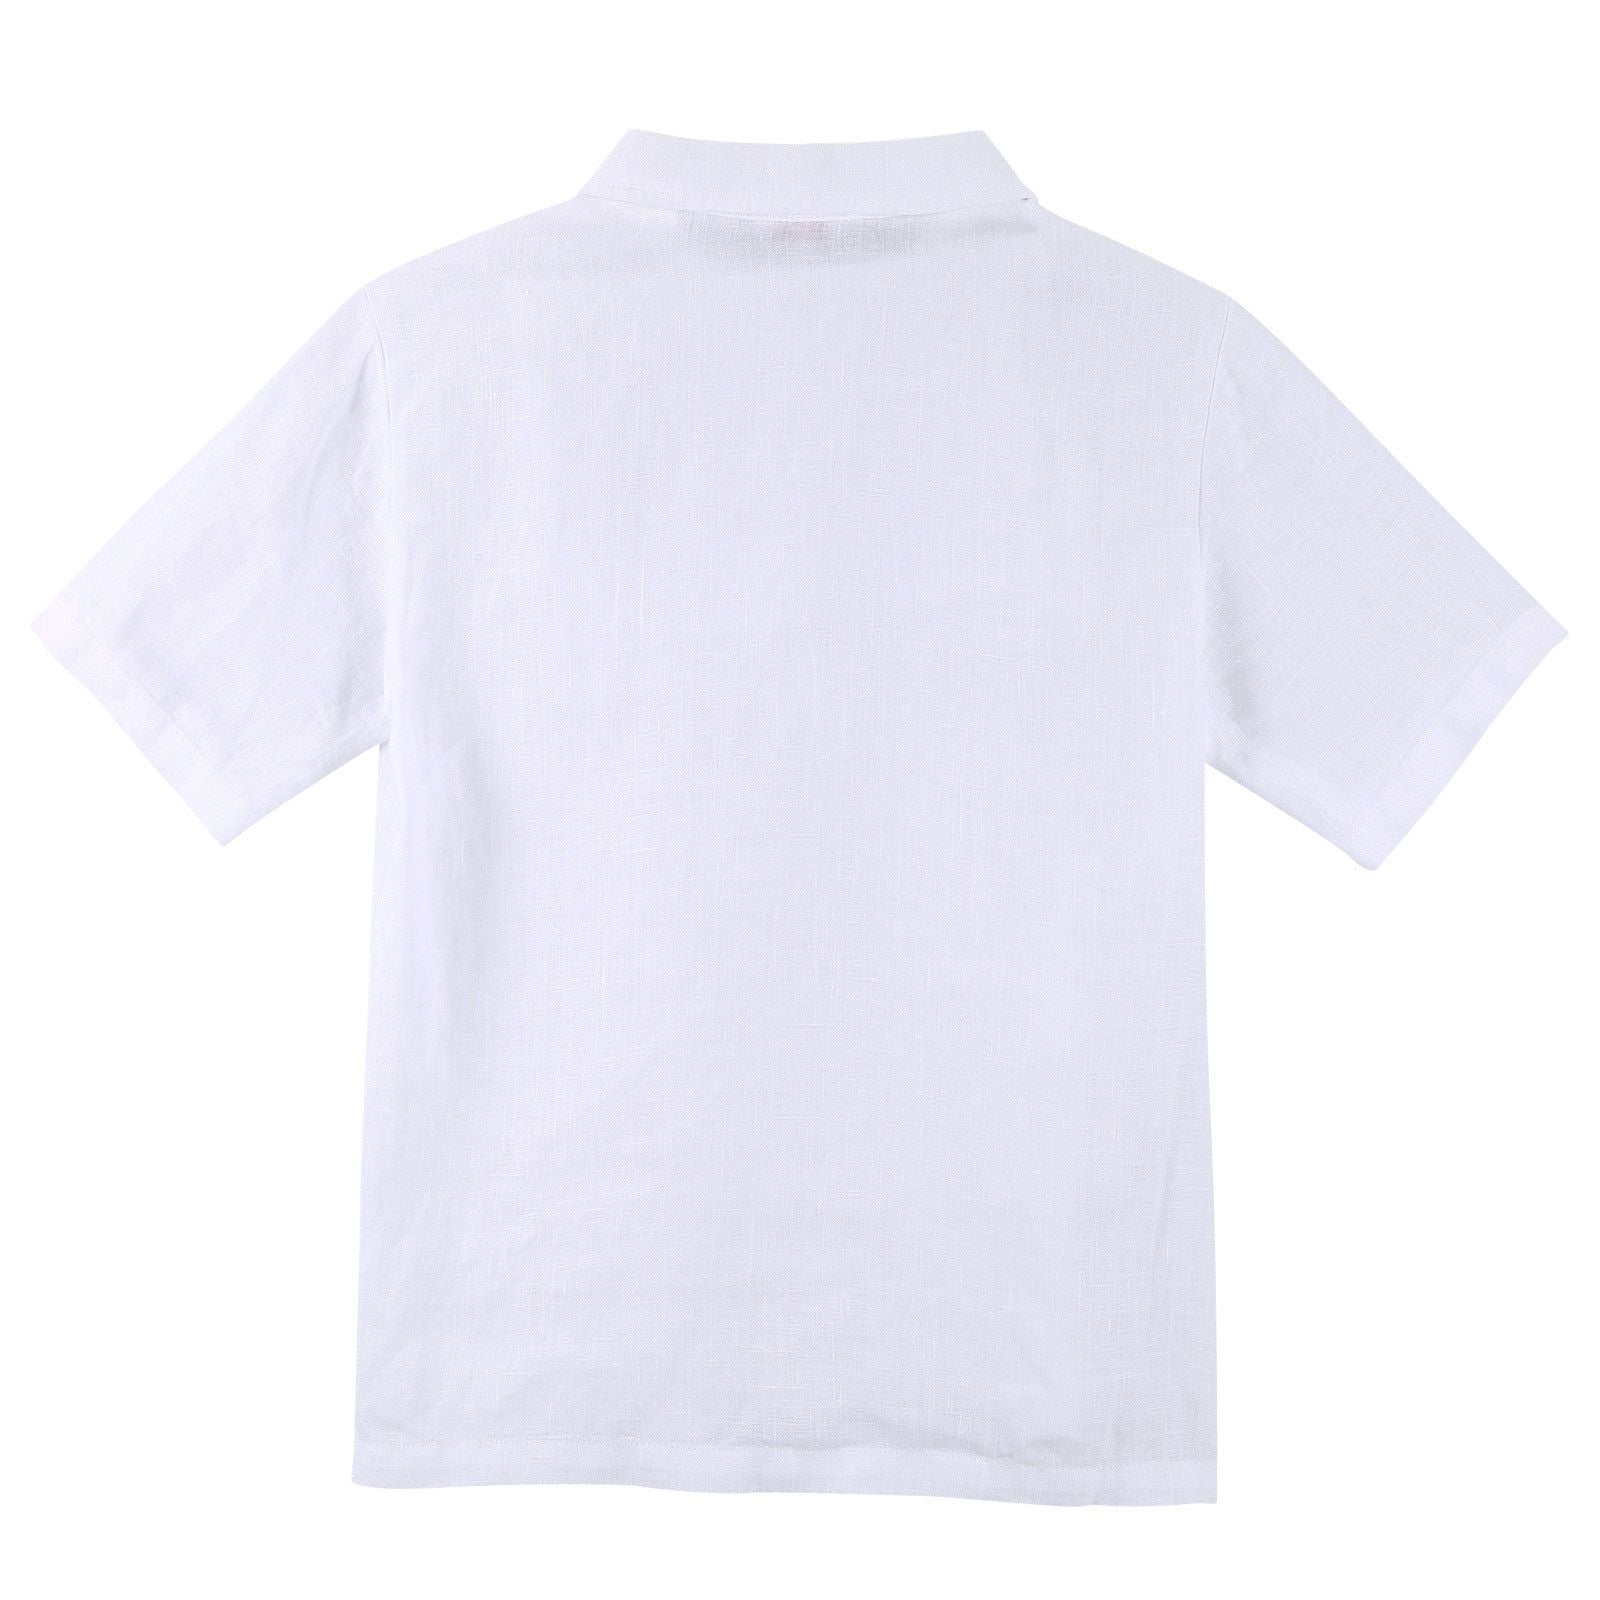 Boys White Liene Polo Shirts With Peter Pan Collar - CÉMAROSE | Children's Fashion Store - 2